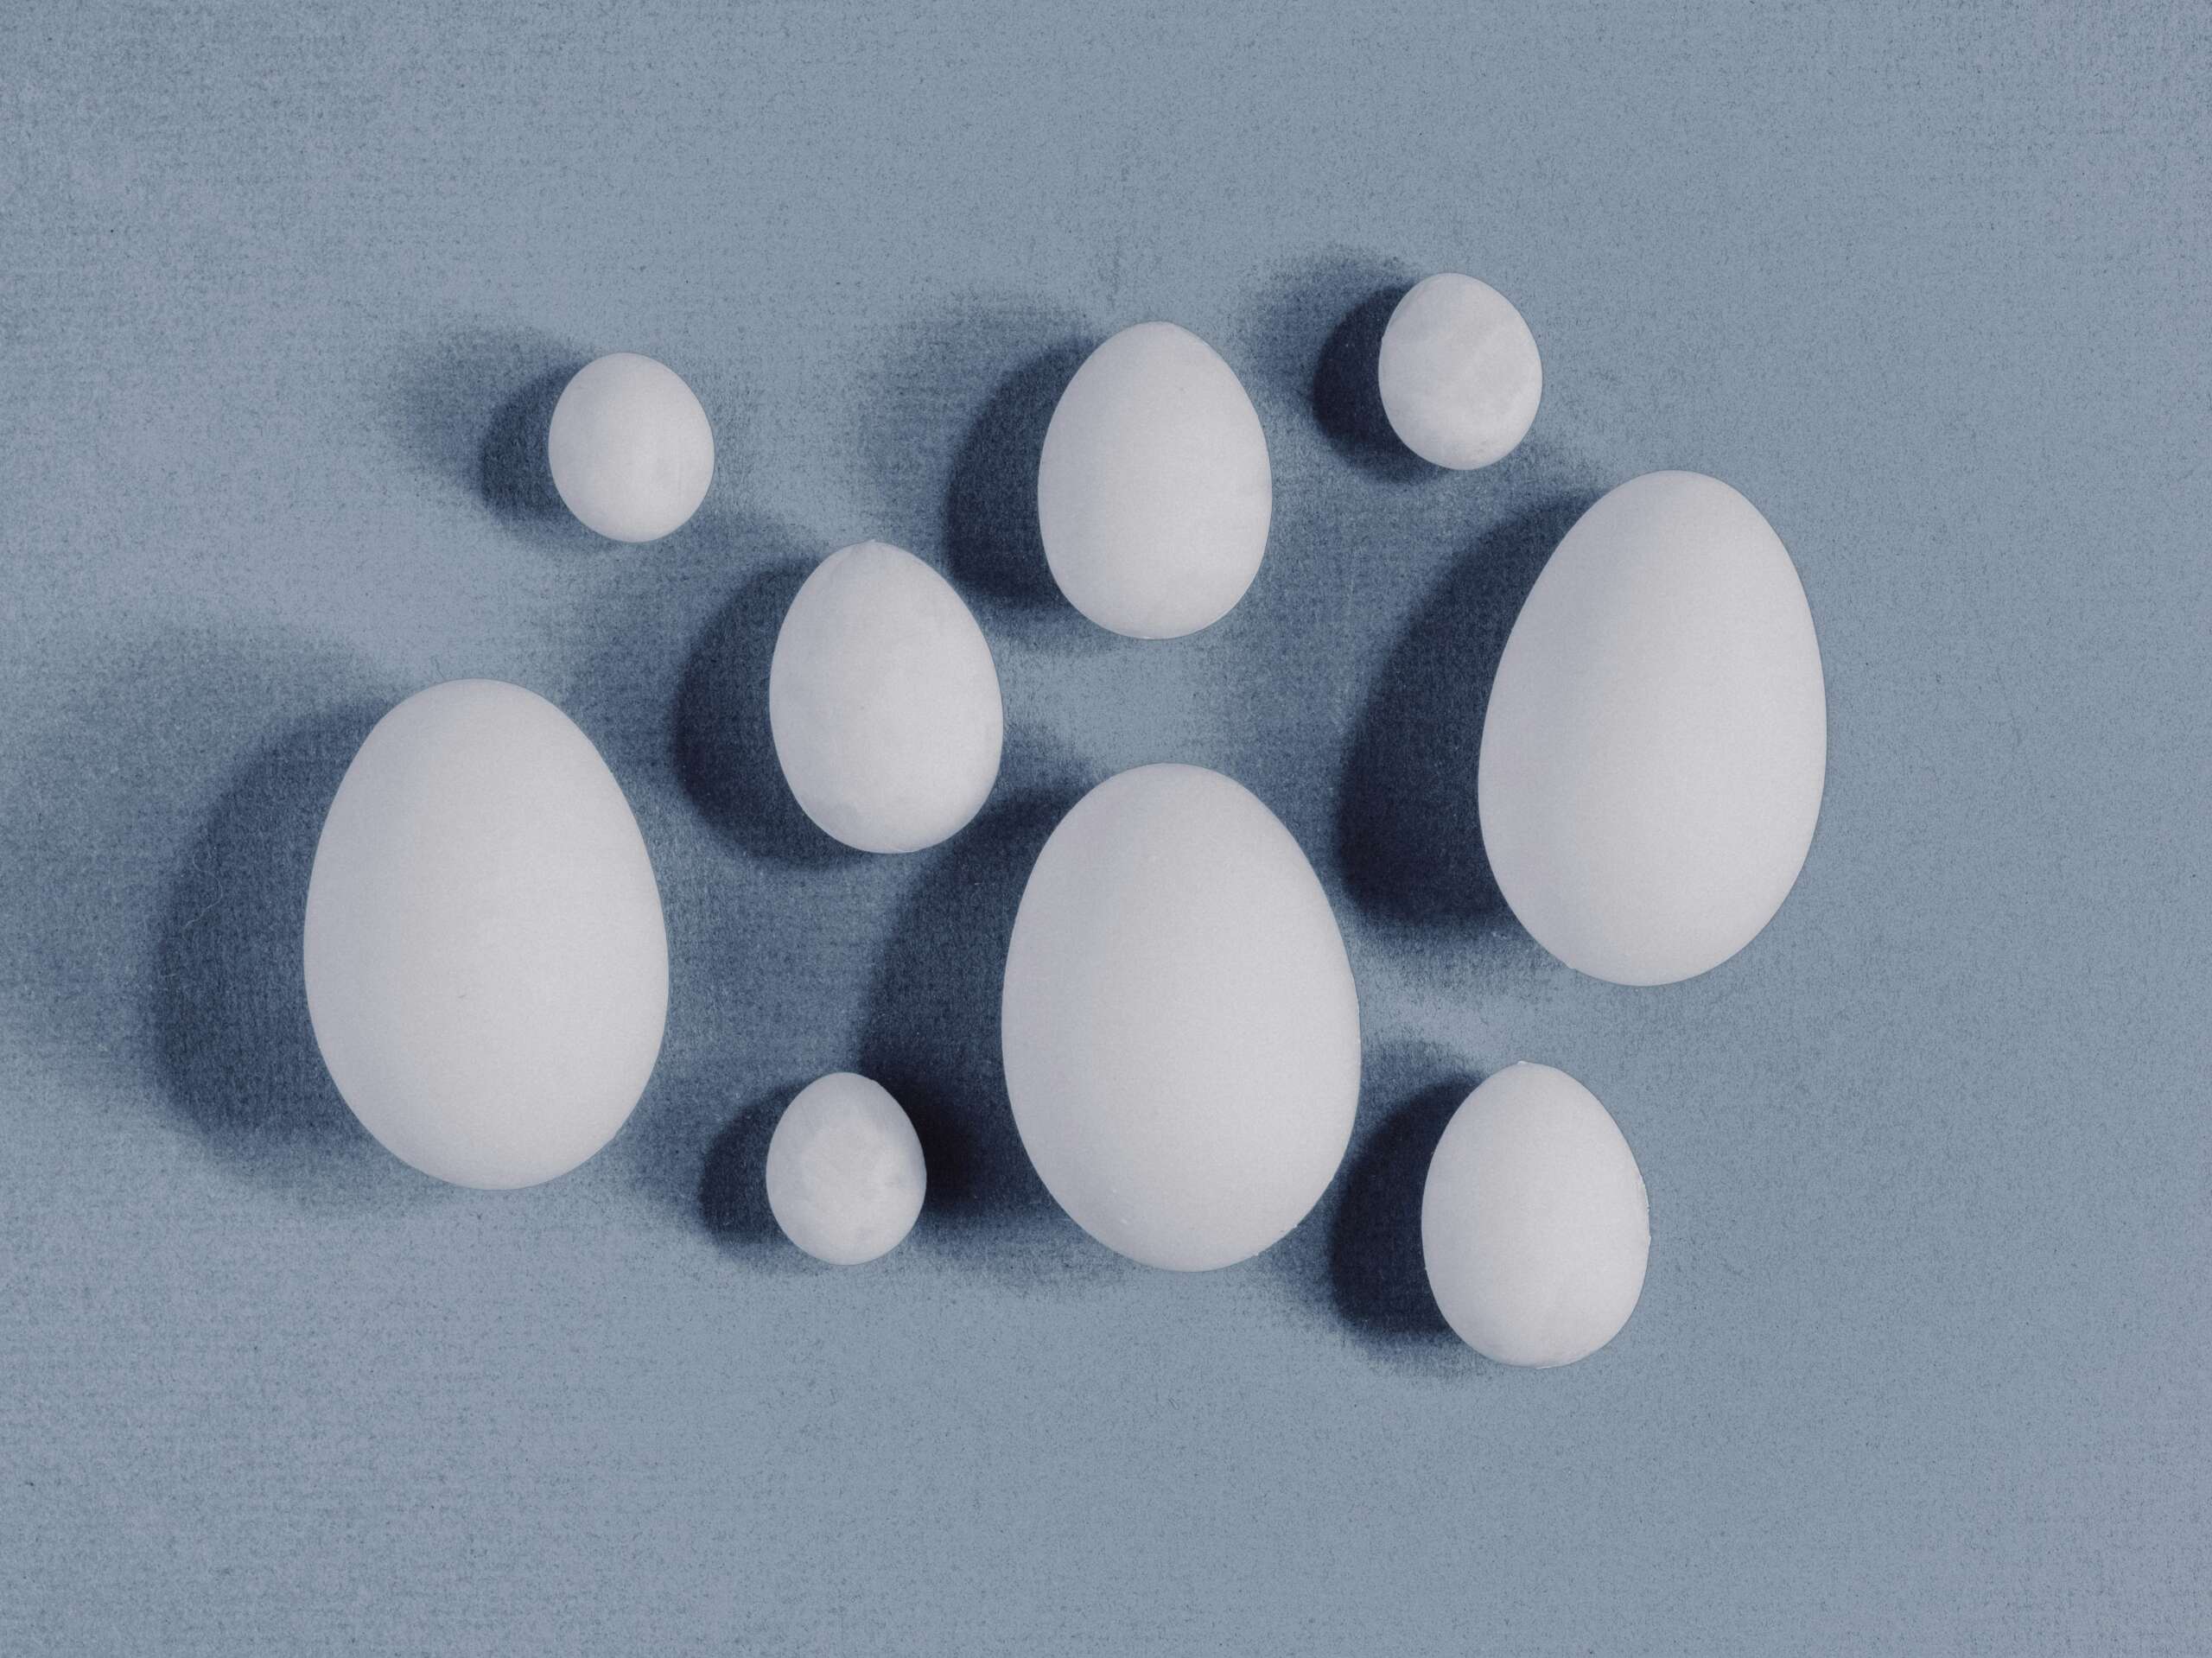 Grey eggs